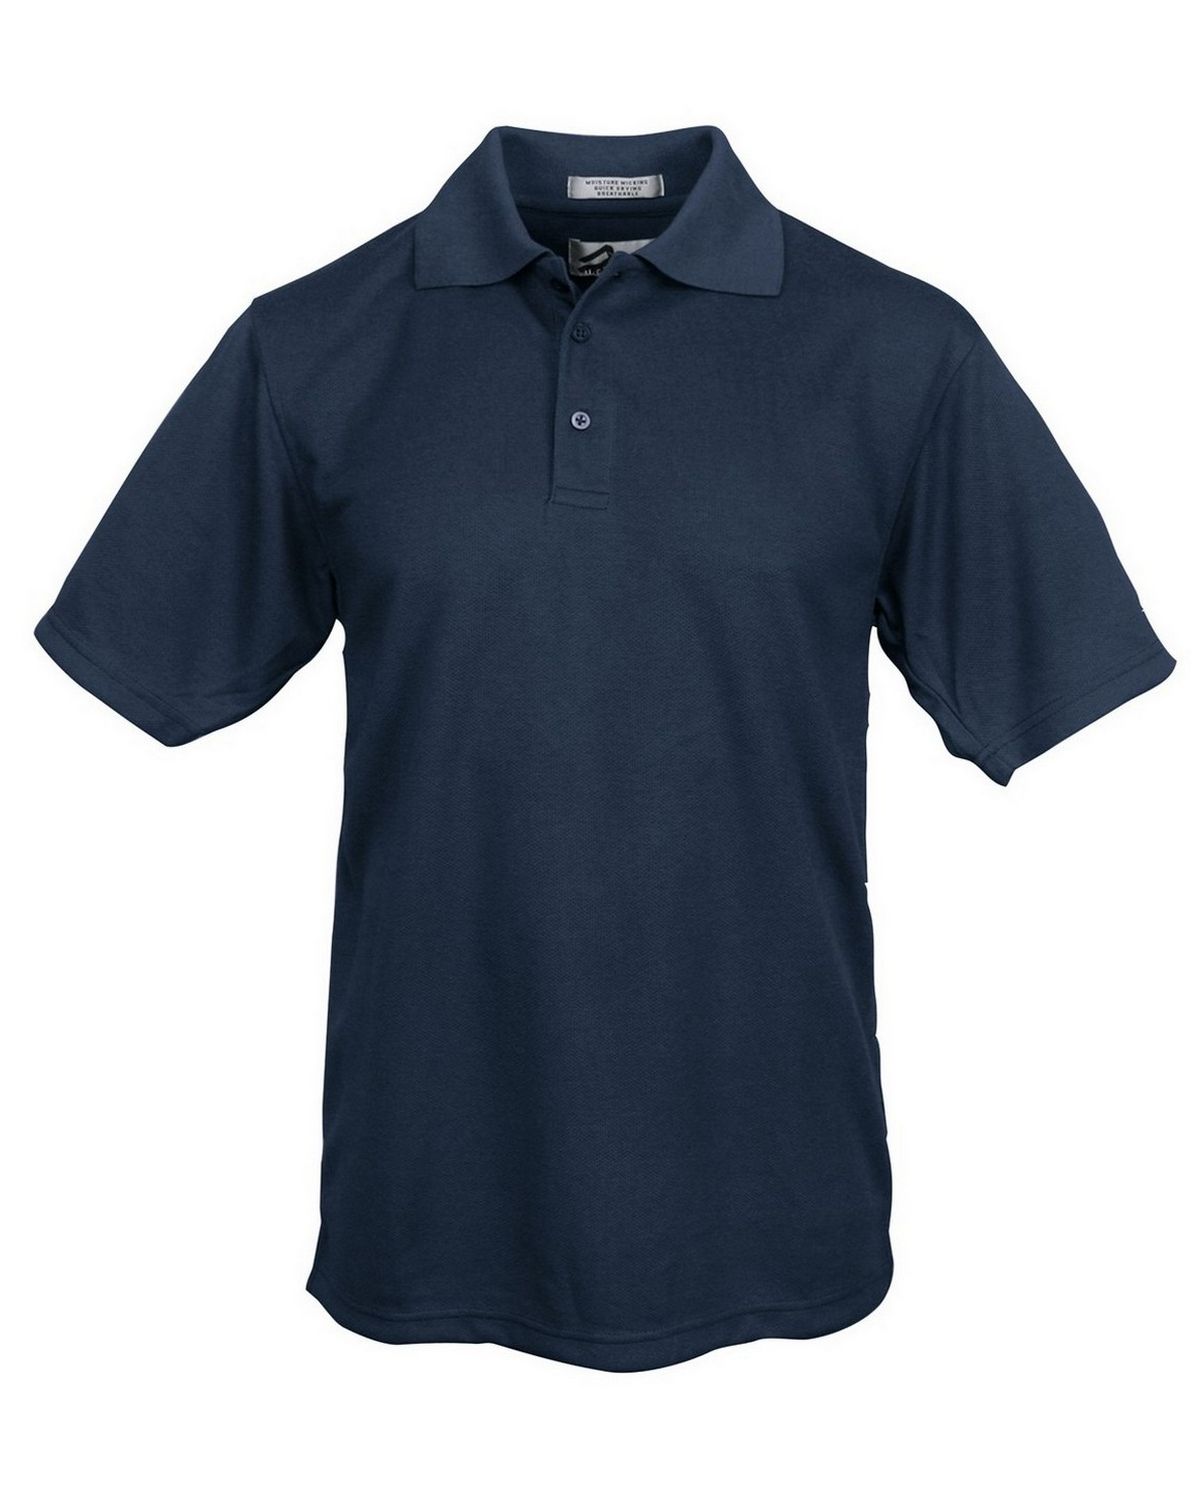 Buy Tri-Mountain Performance 108 Men's Poly UltraCool mesh golf shirt